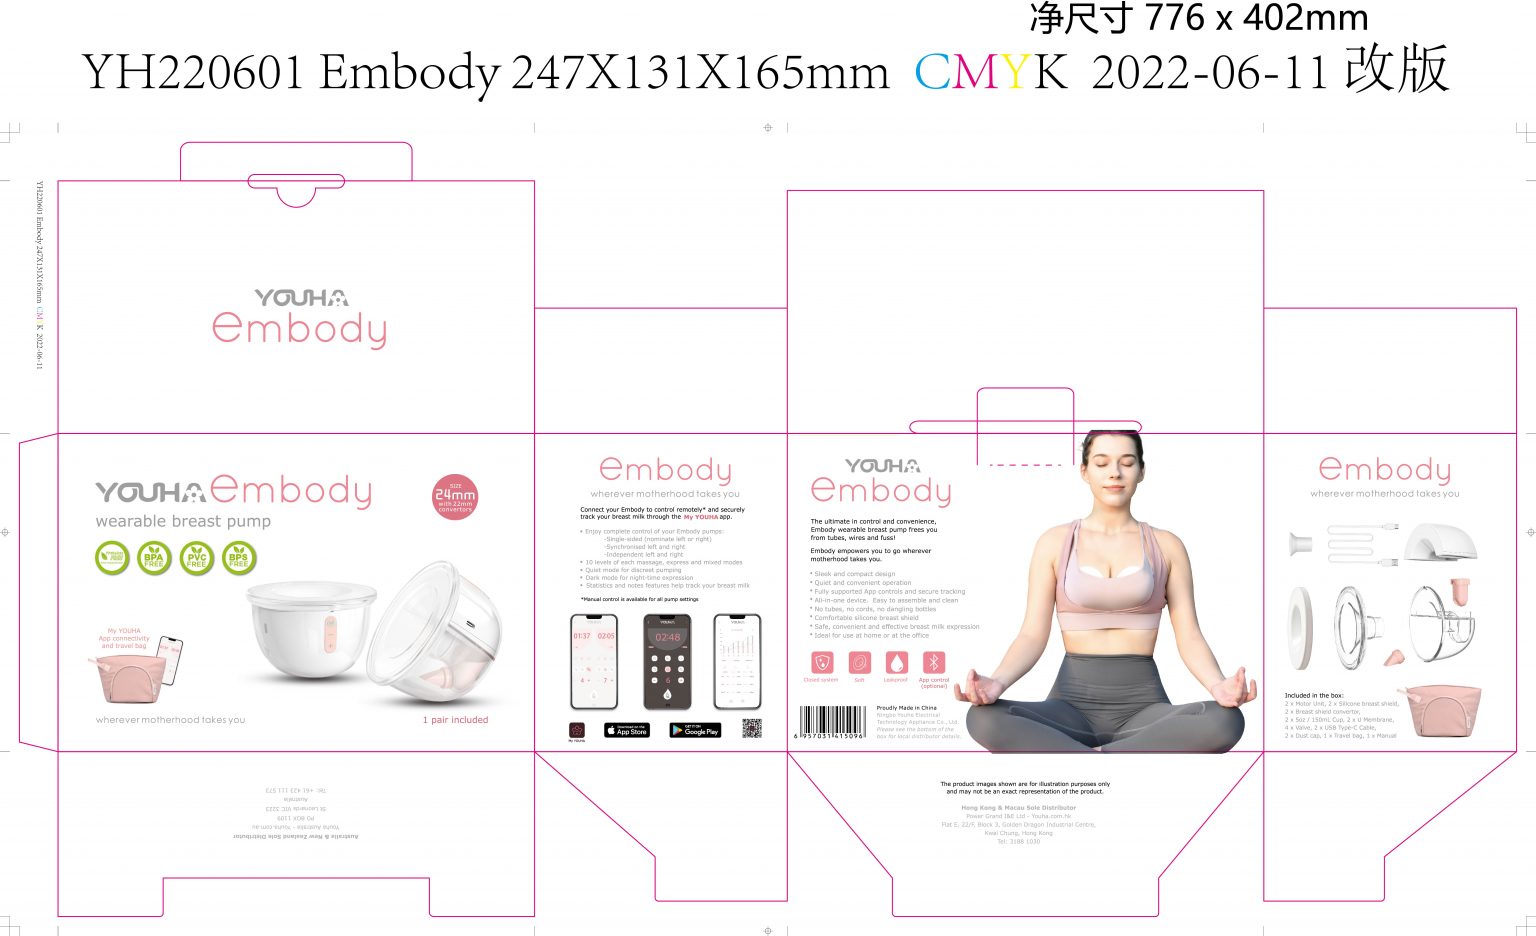 embody-packaging-box-11-june-2022-1536x936.jpg